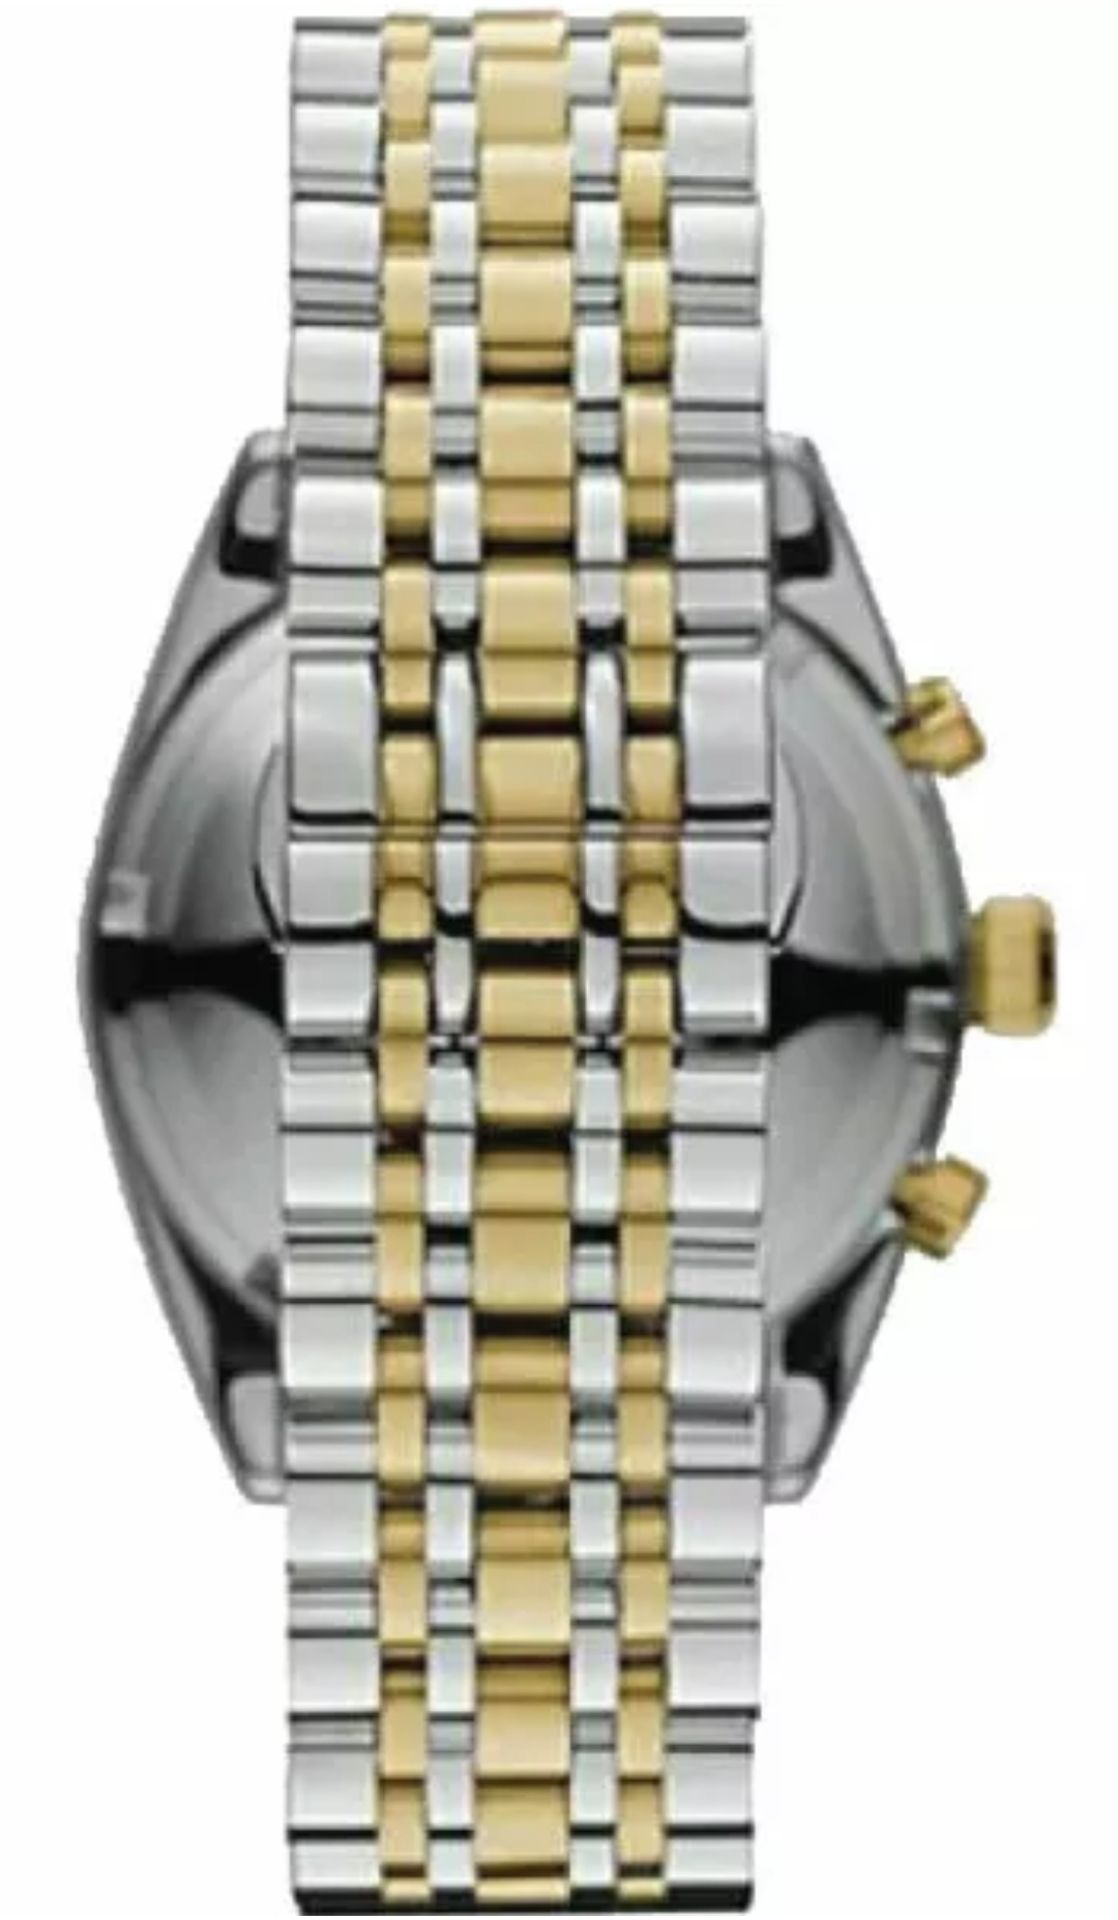 Emporio Armani AR0396 Men's two Tone Gold & Silver Quartz Chronograph Watch - Image 4 of 9